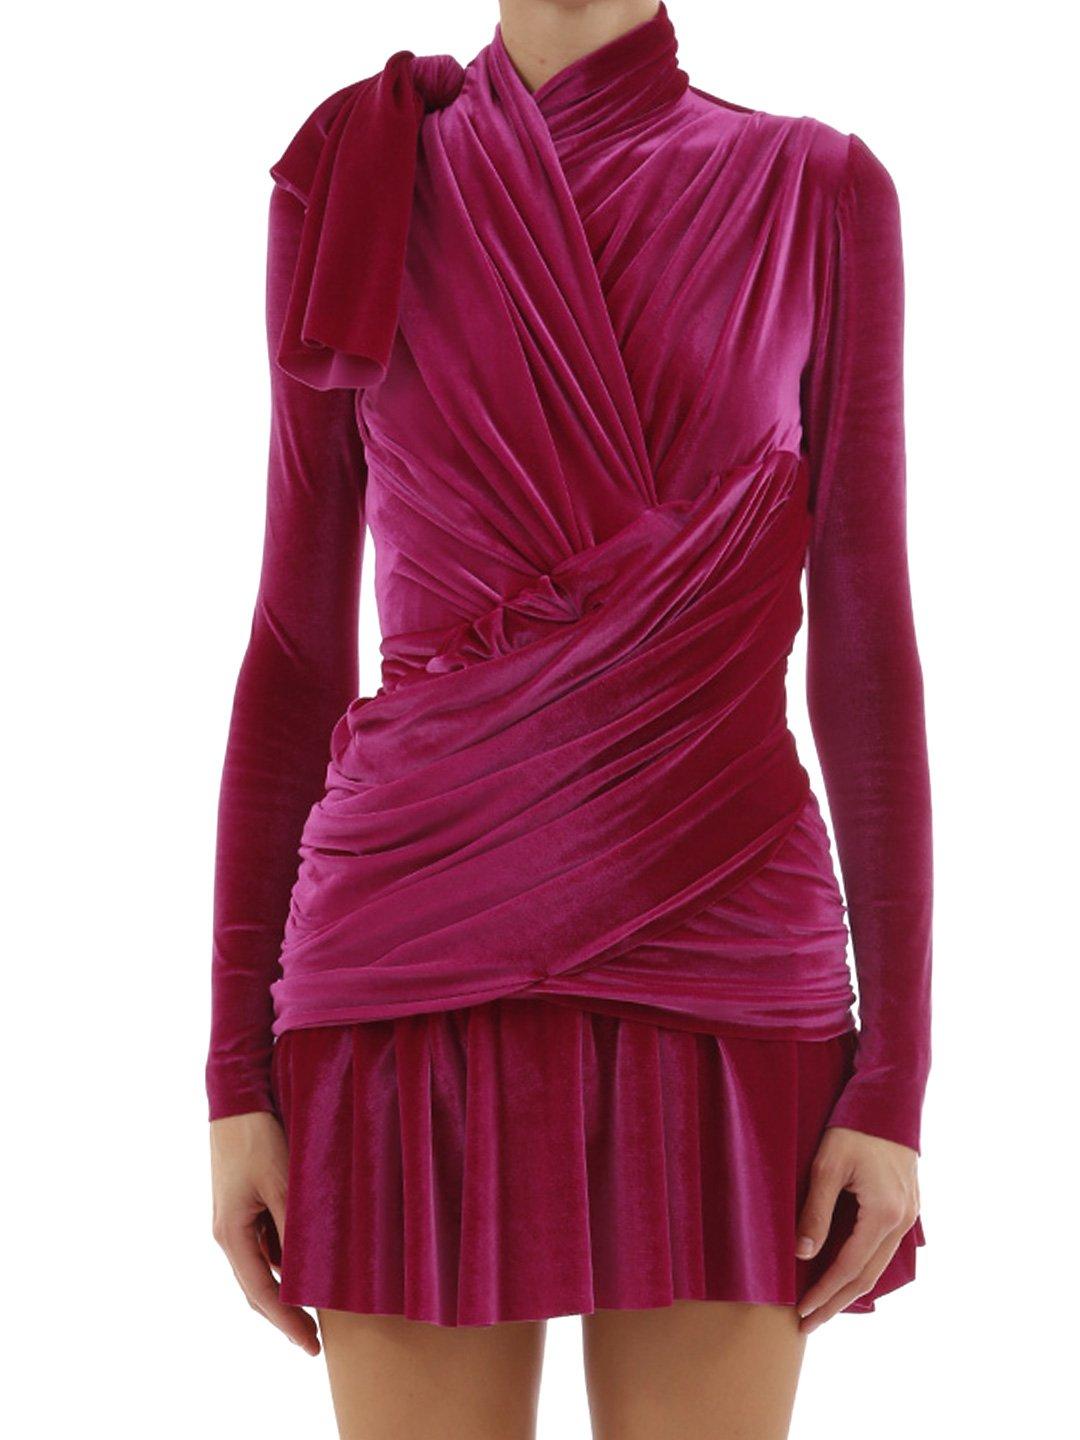 Balenciaga Velvet Draped Wrapped Dress in Dark Pink (Pink) | Lyst